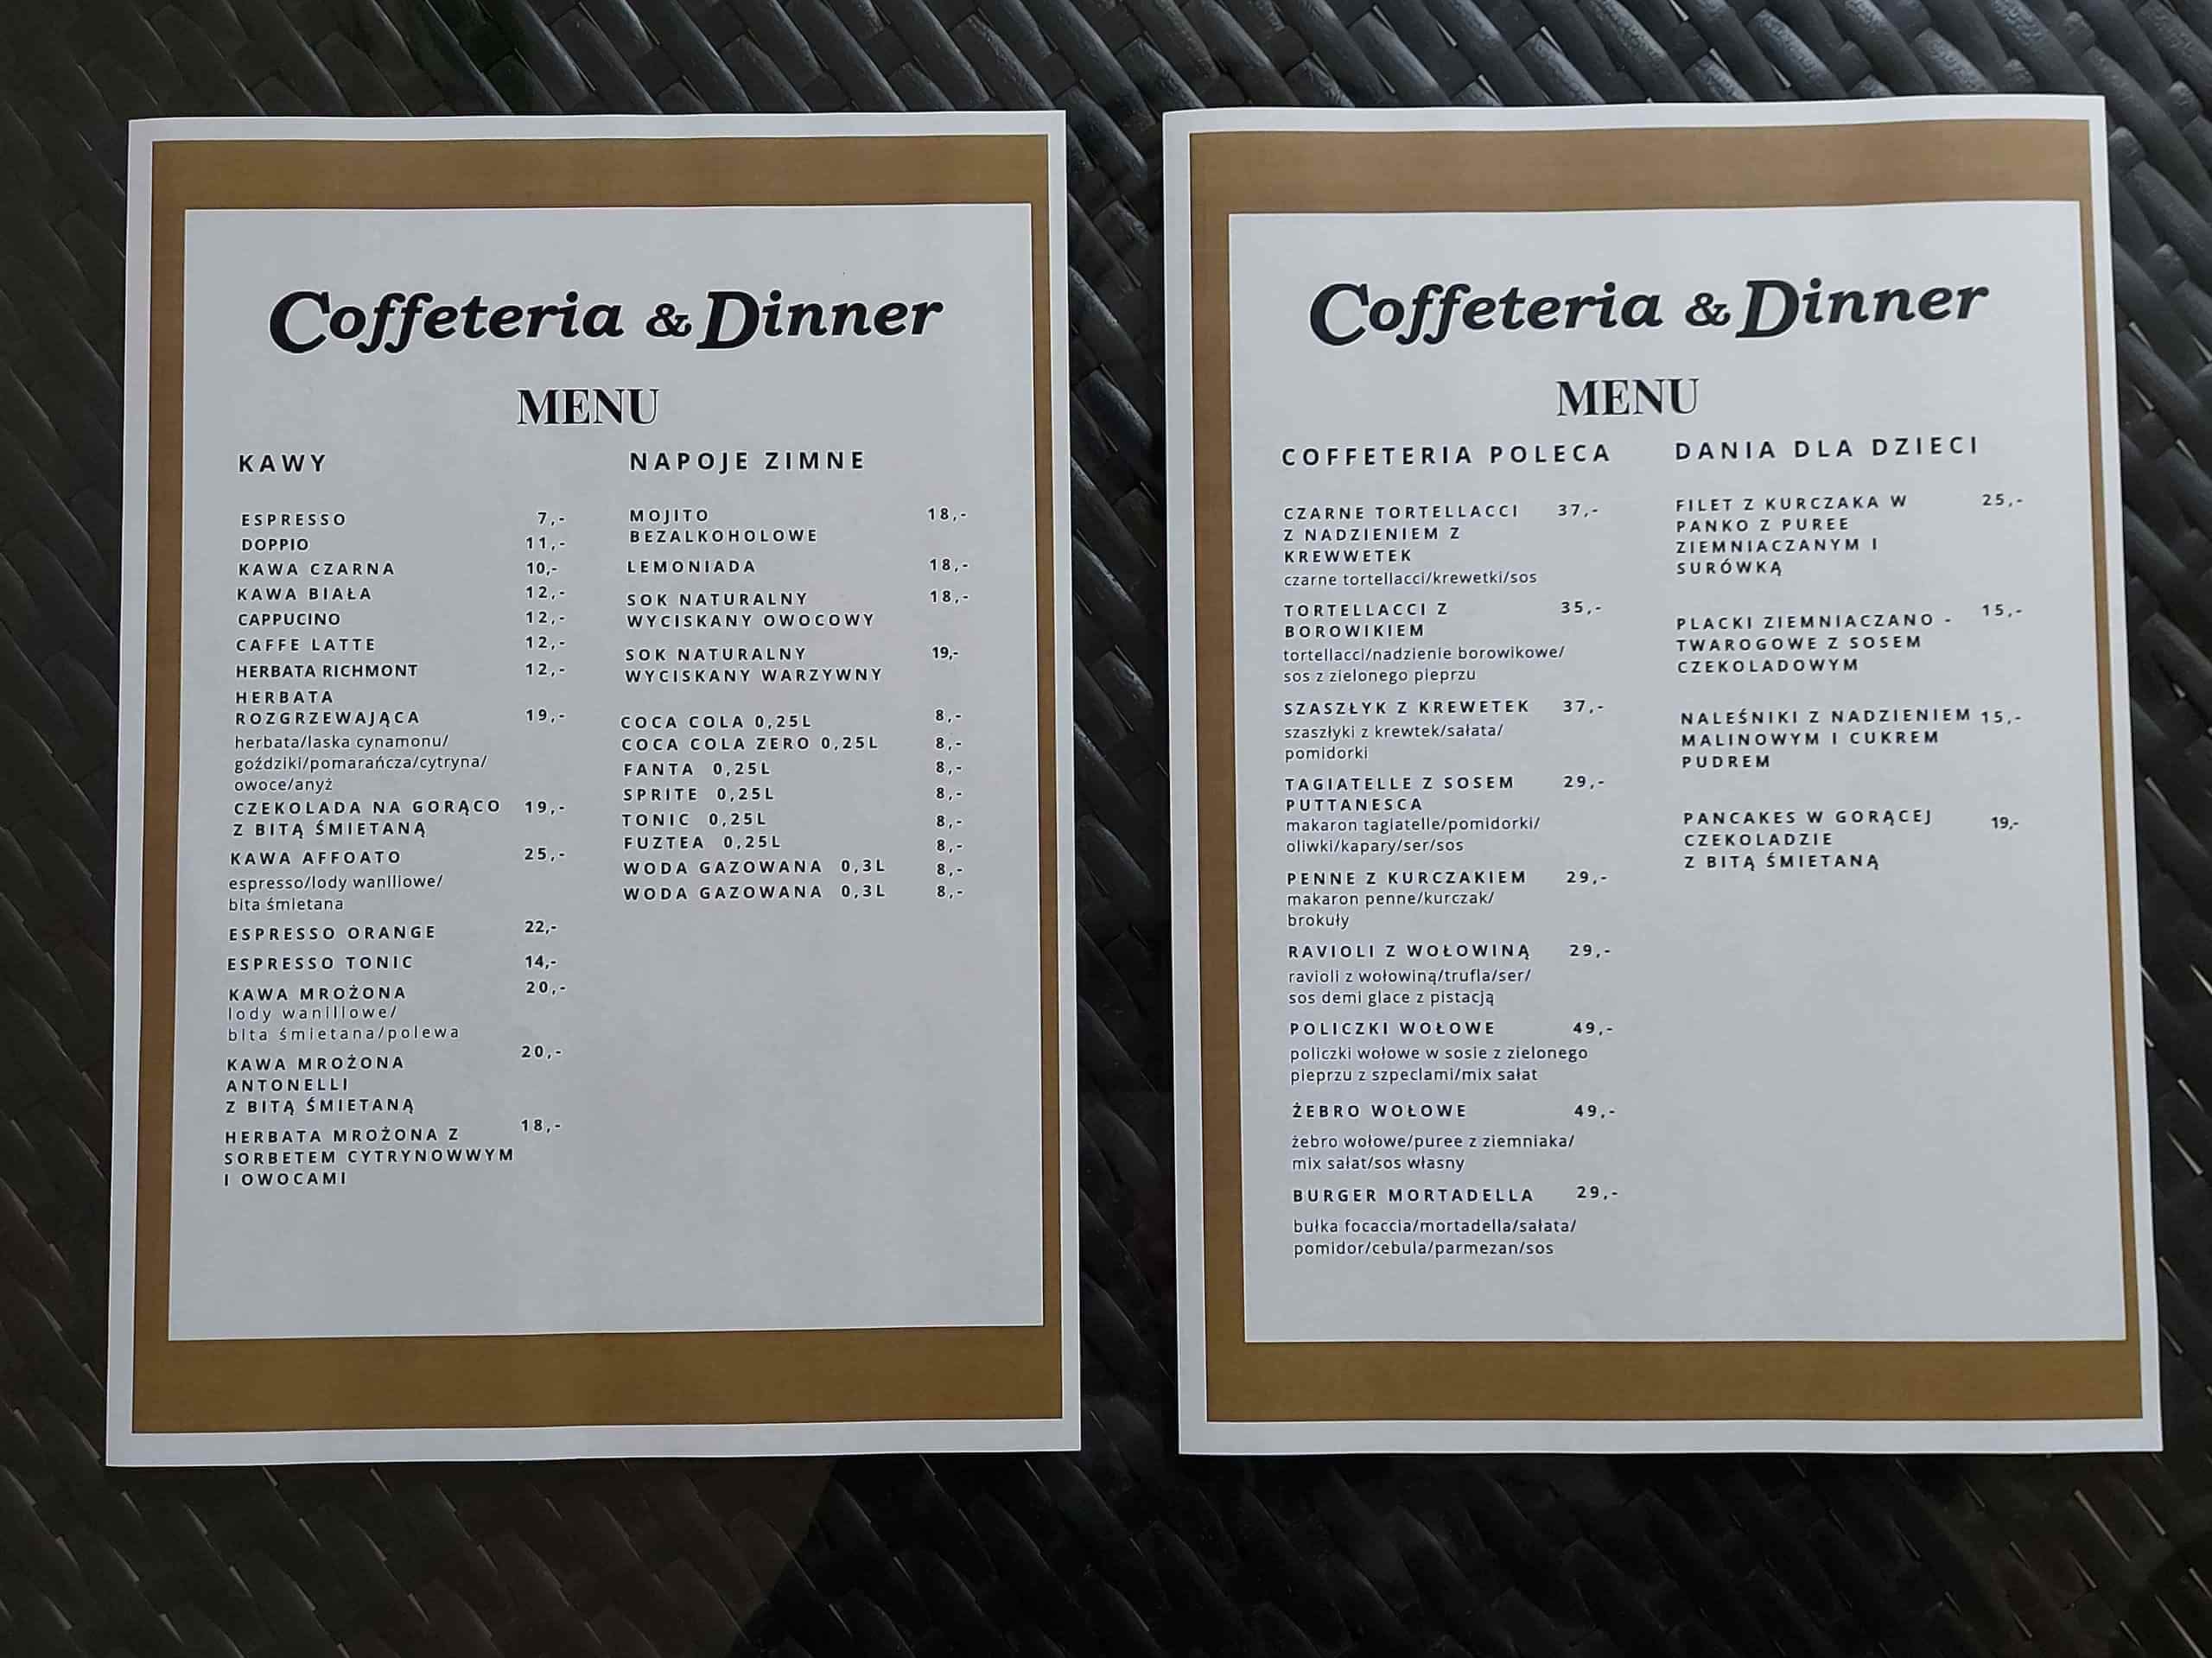 Coffeteria&Dinner menu